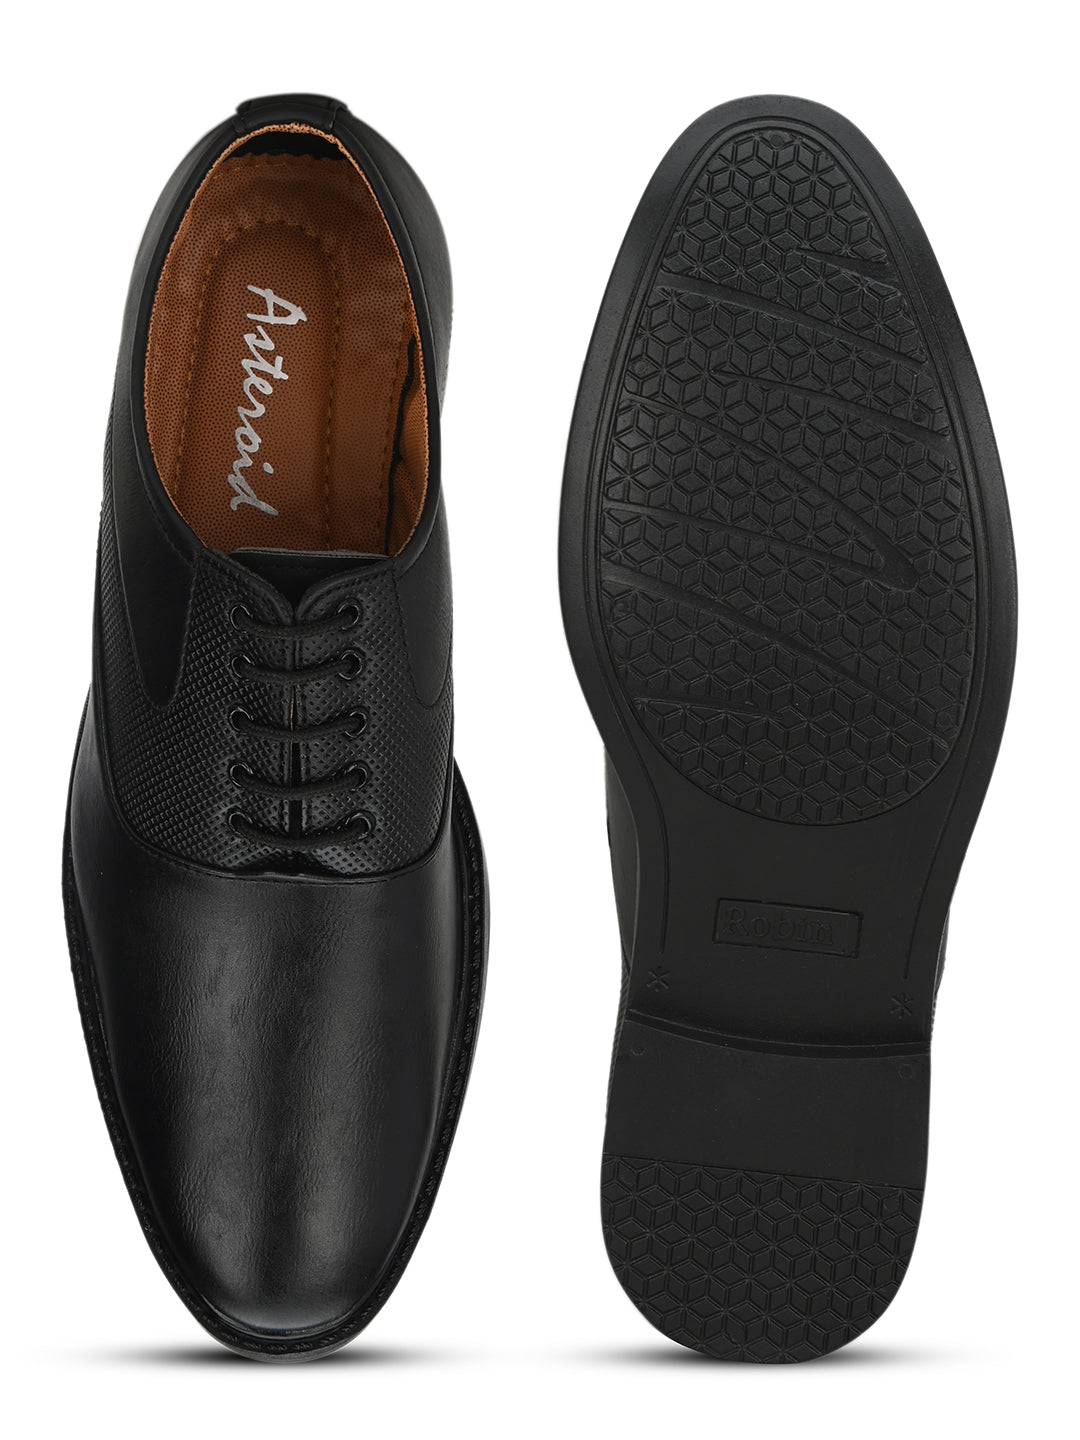 ASTEROID Men's Formal Derby Shoes.